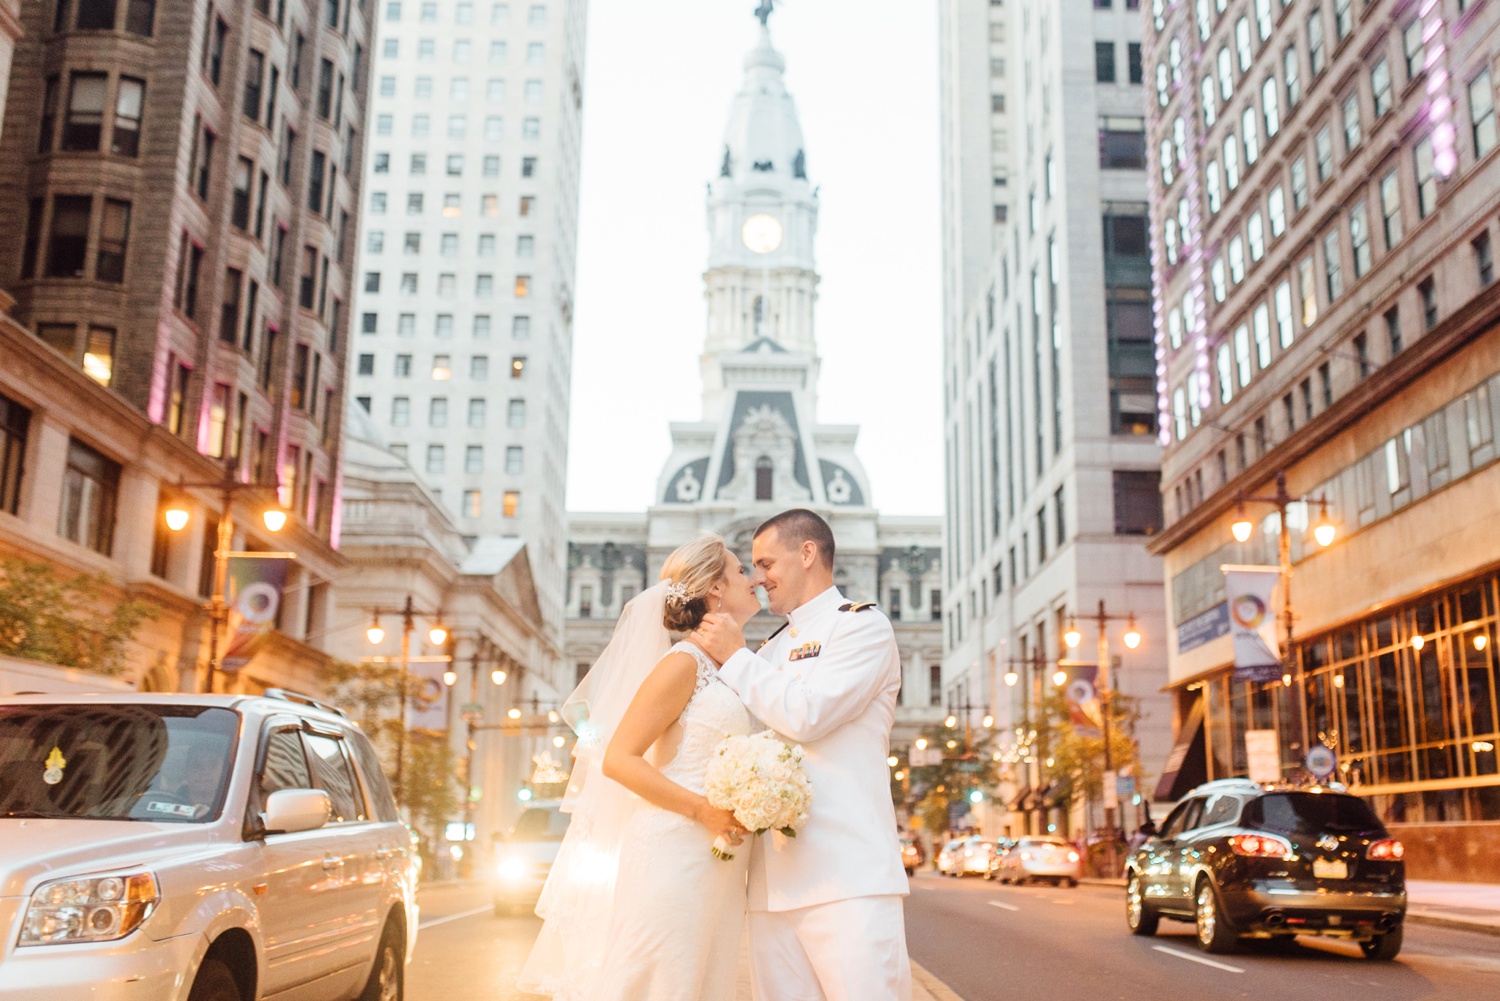 Molly + Shane - Crystal Tea Room Wedding - Philadelphia Wedding Photographer - Alison Dunn Photography photo